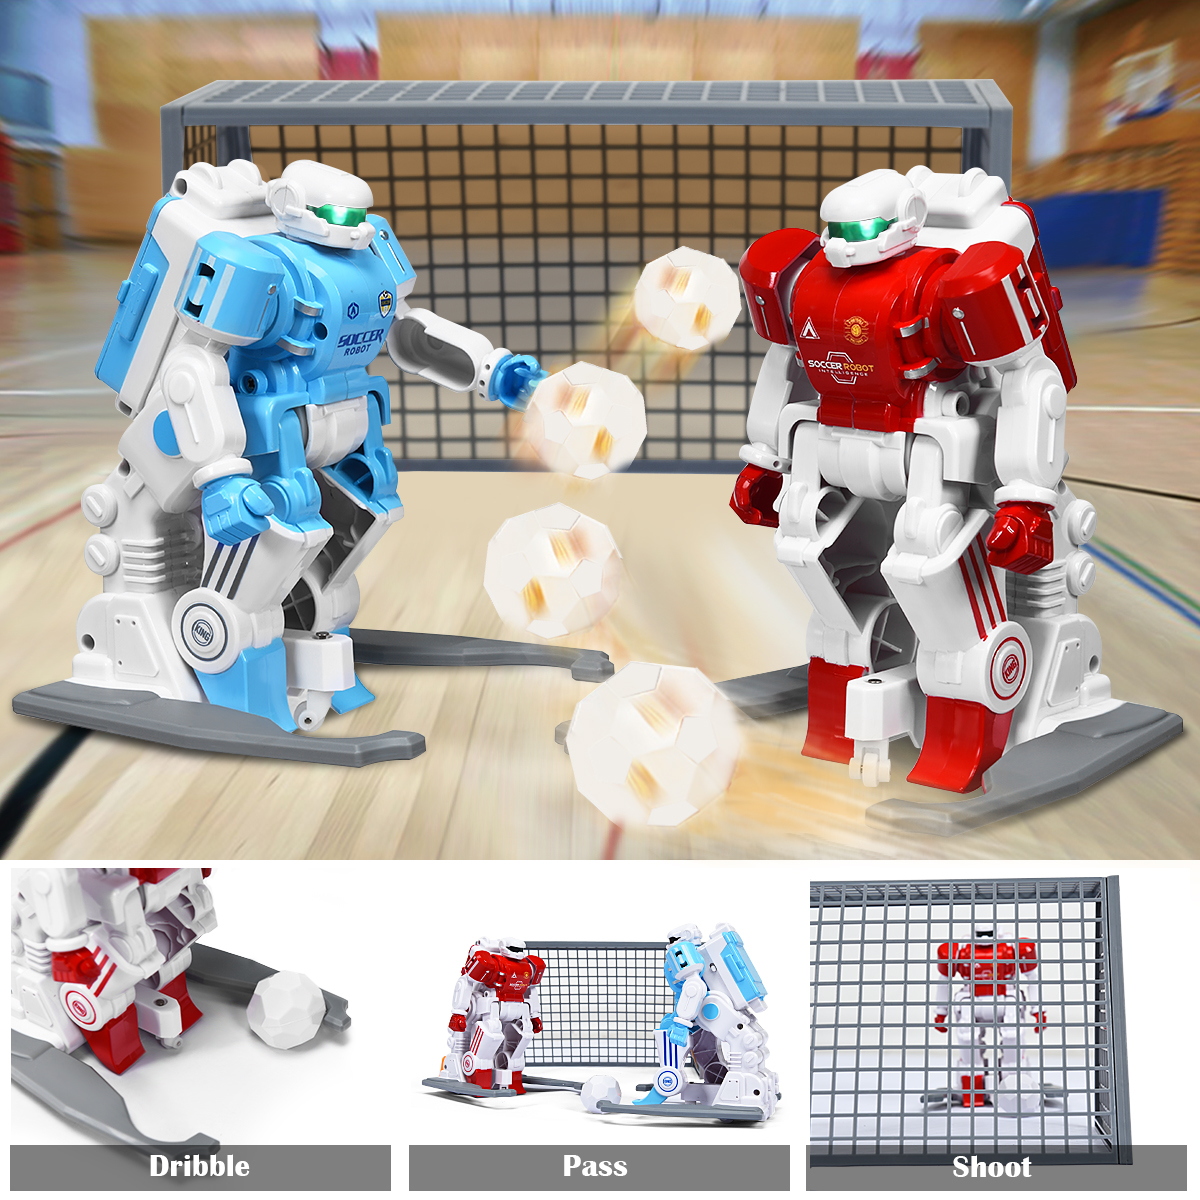 Topbuy 2 PCS RC Soccer Robots Smart Robot Toy for Kids Indoor &Outdoor